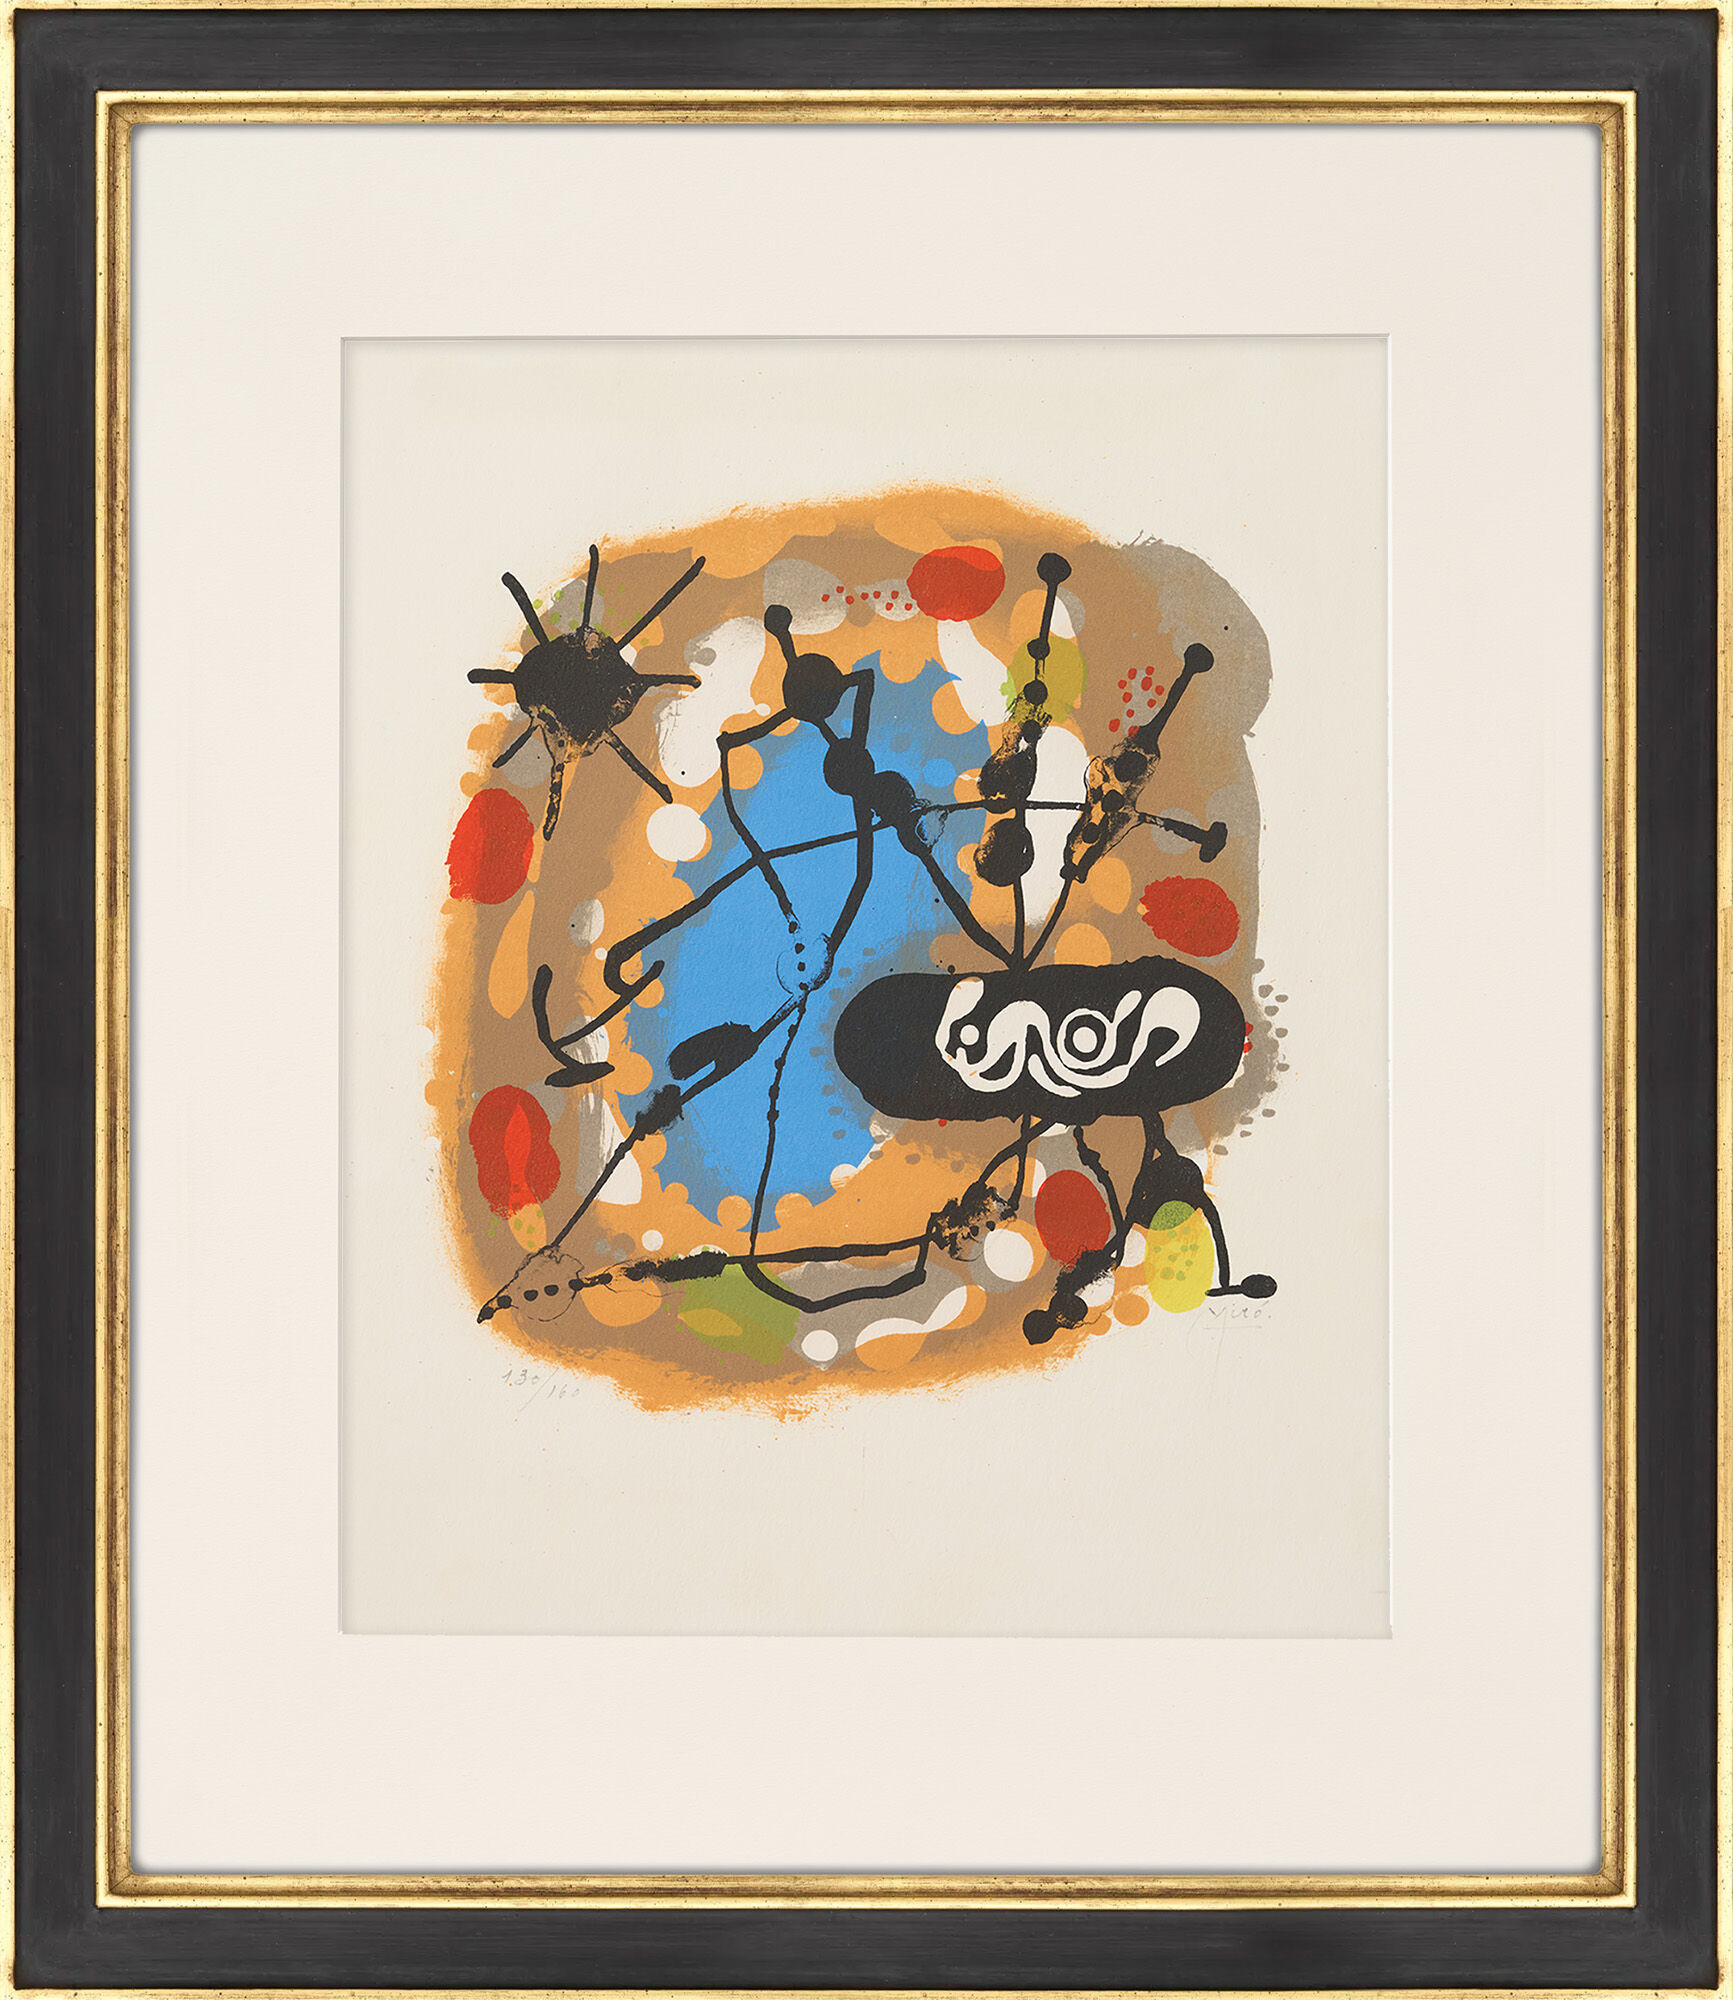 Tableau "Atmosphera Miro" (1959) von Joan Miró